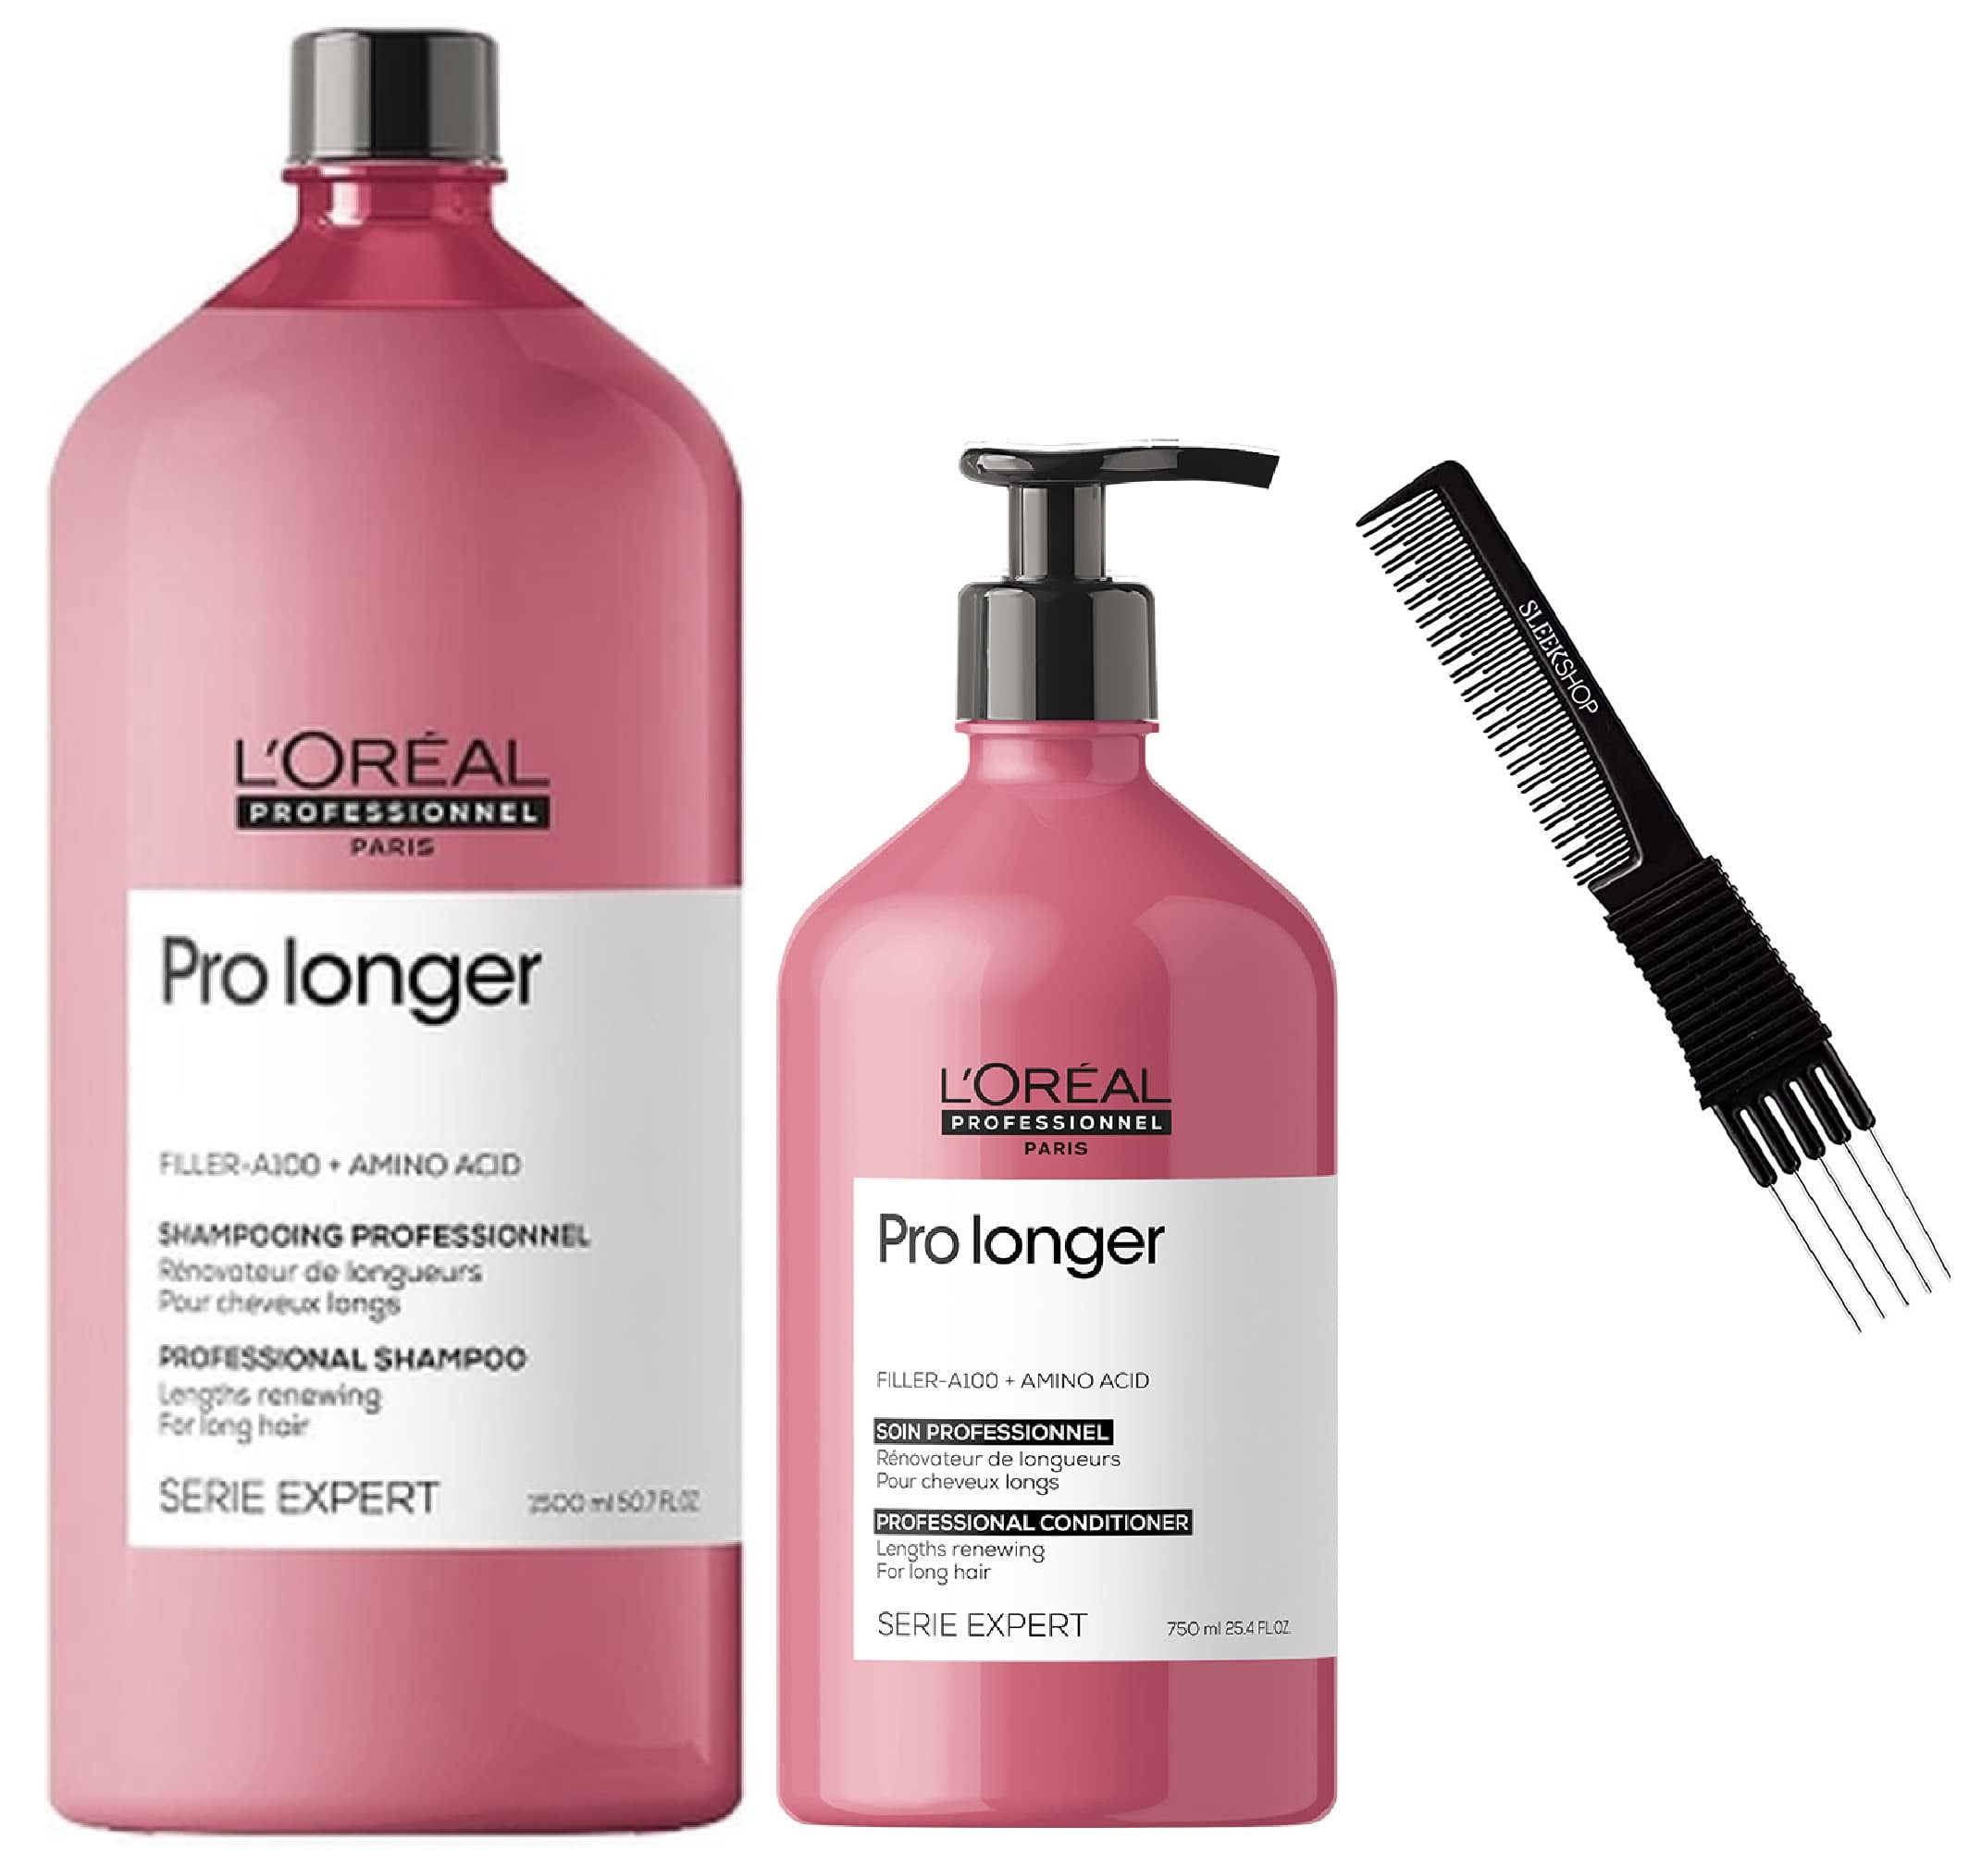 L'oreal SERIE EXPERT Pro Longer Professional Shampoo & Conditioner DUO Set, Lengths Renewing for Long Hair Kit (w/ Sleek Teasing Comb) (PRO LONGER LENGTHS - 50.7 oz 25.4 oz) - Walmart.com